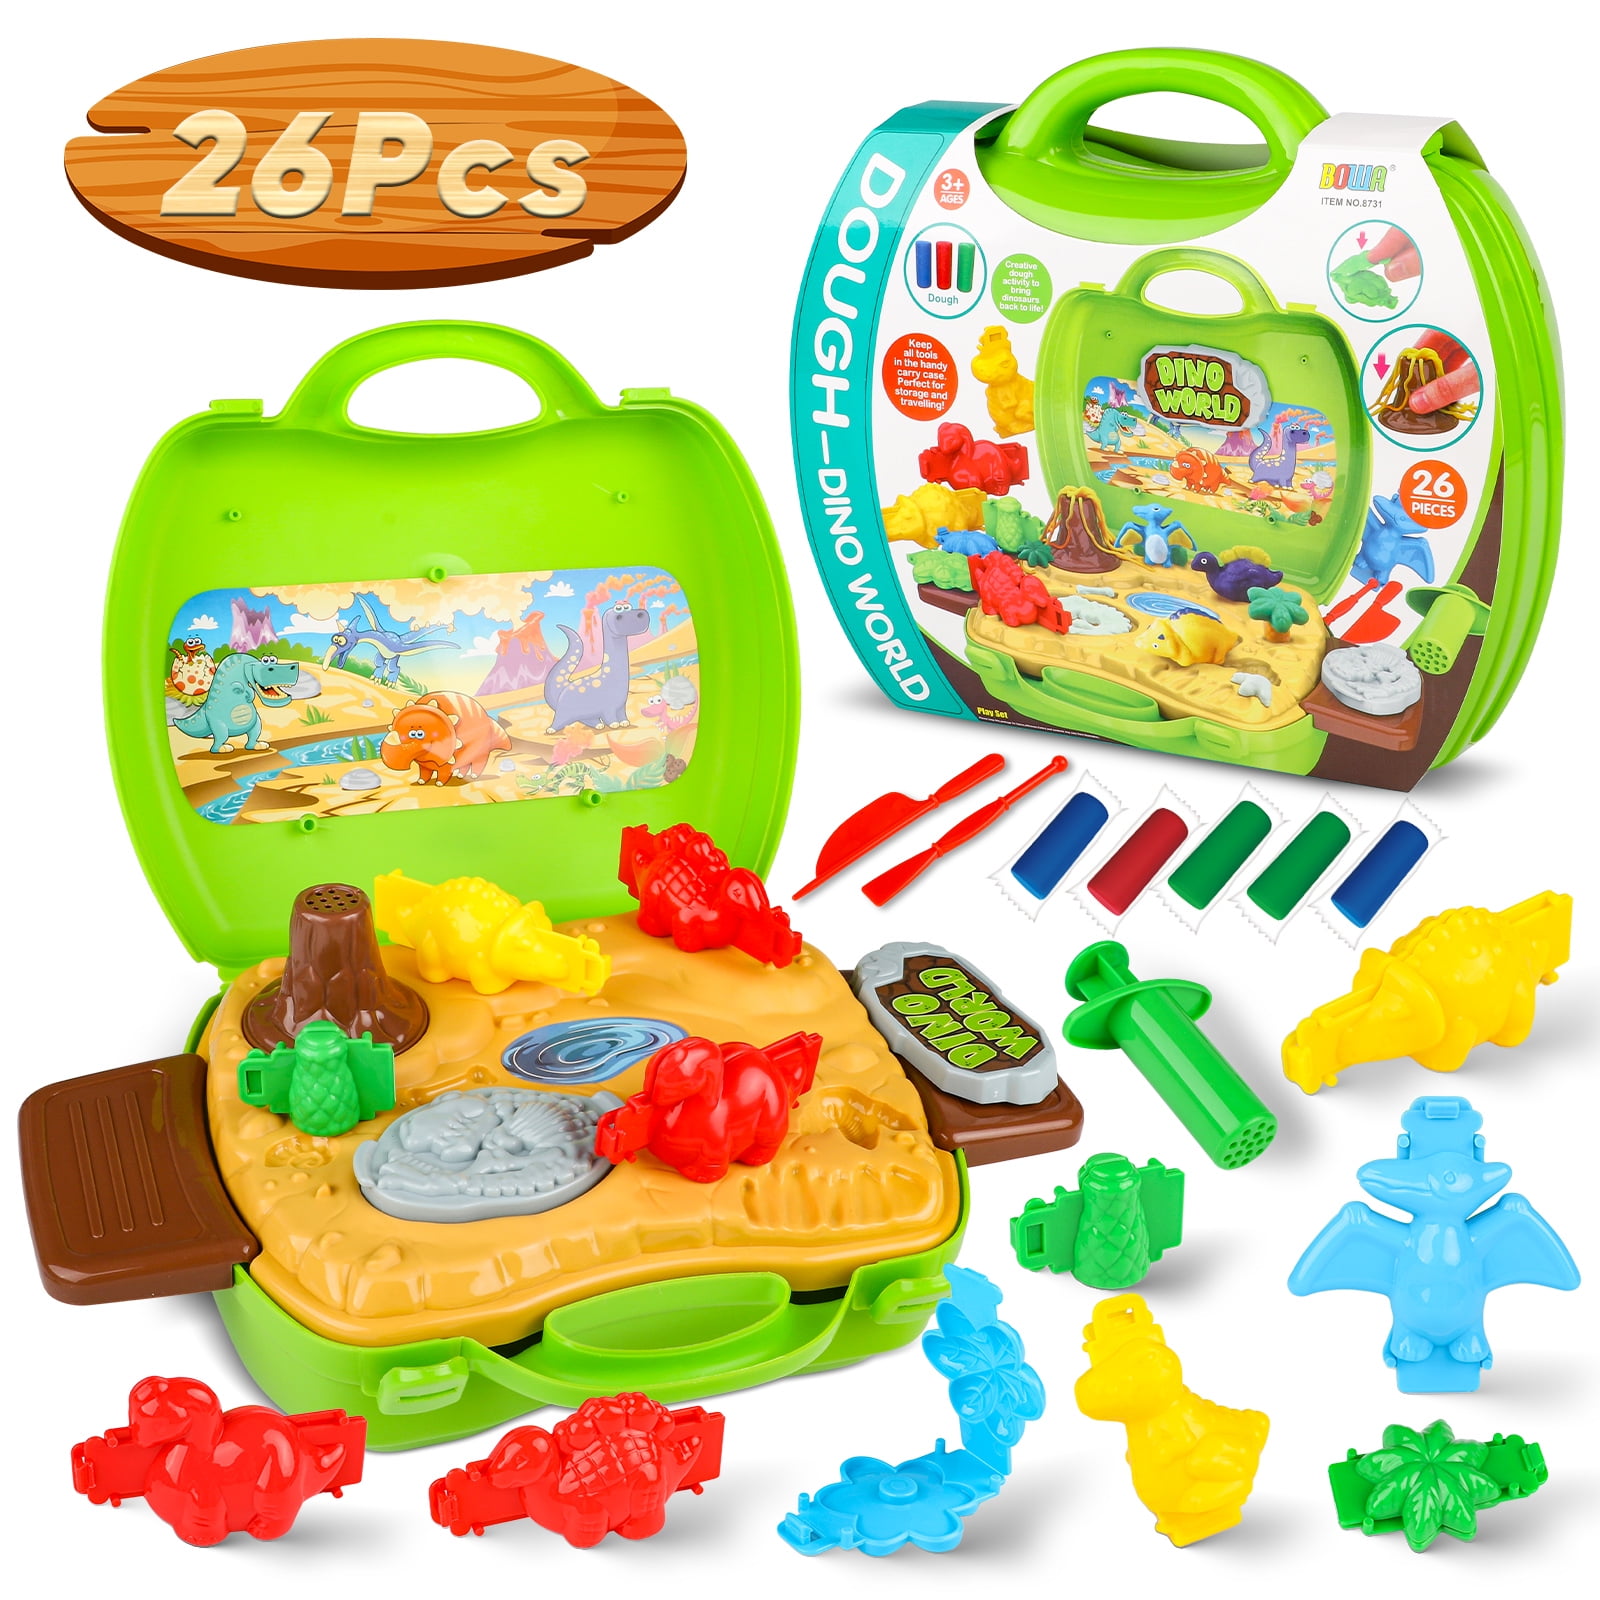 Favorite Play Dough Toy & Tools for Preschool, Pre-K